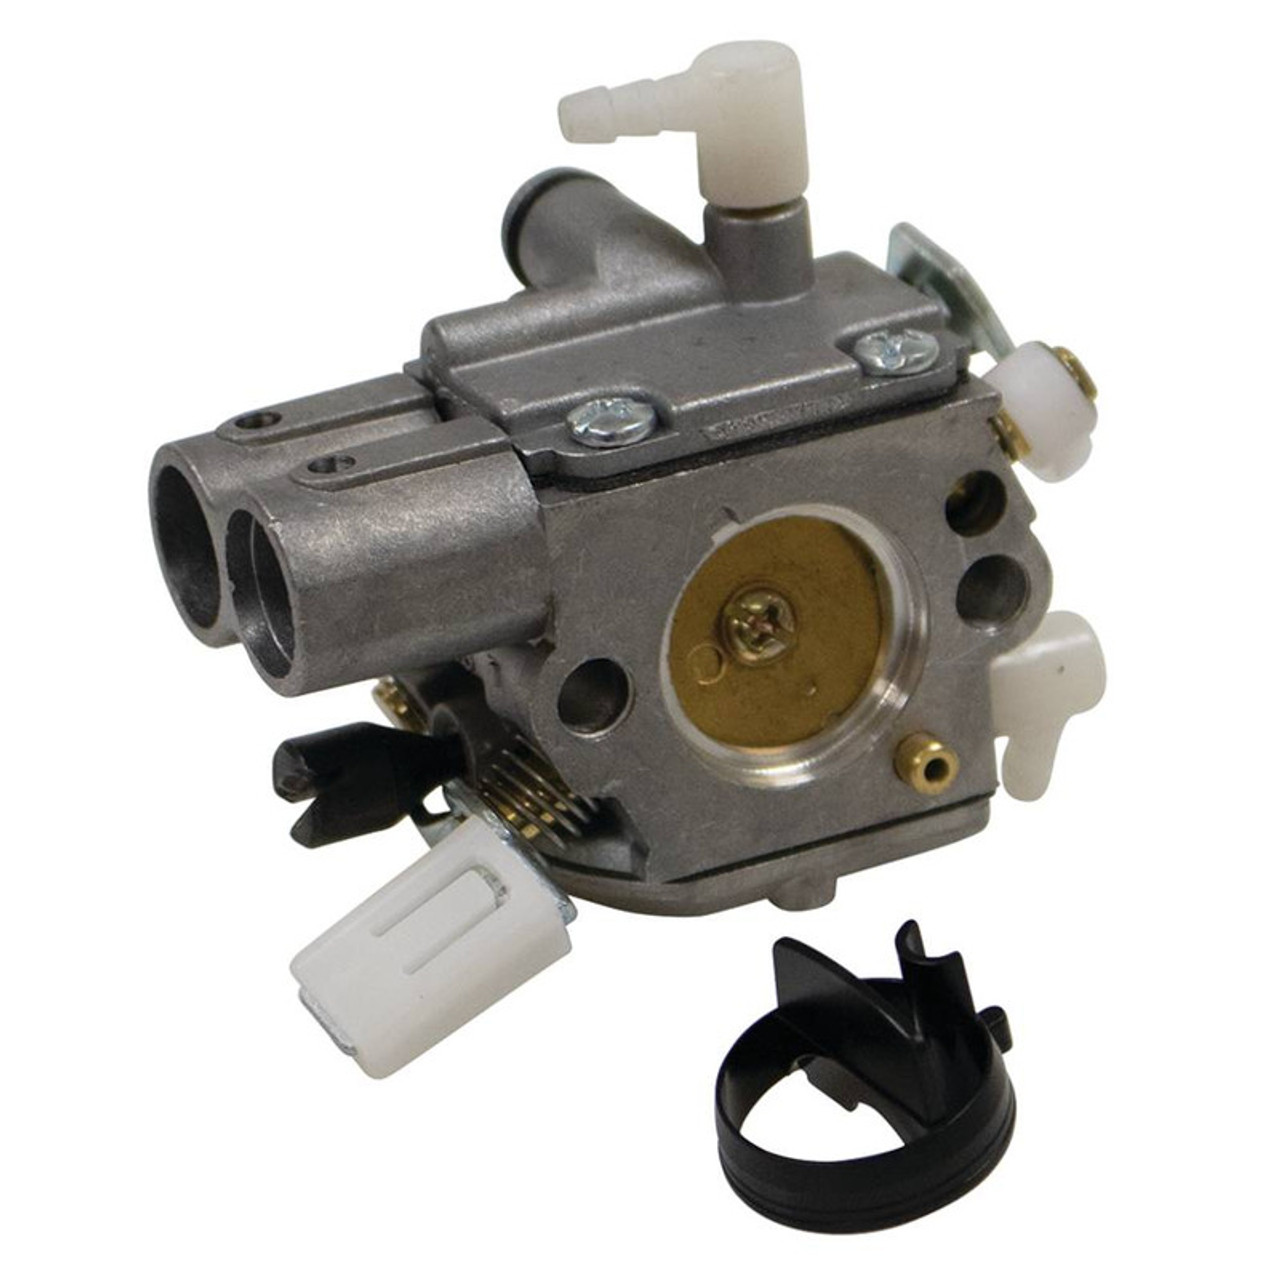 Carburetor for Stihl MS231, MS251, 11431200641, 1143 120 0641 chainsaw